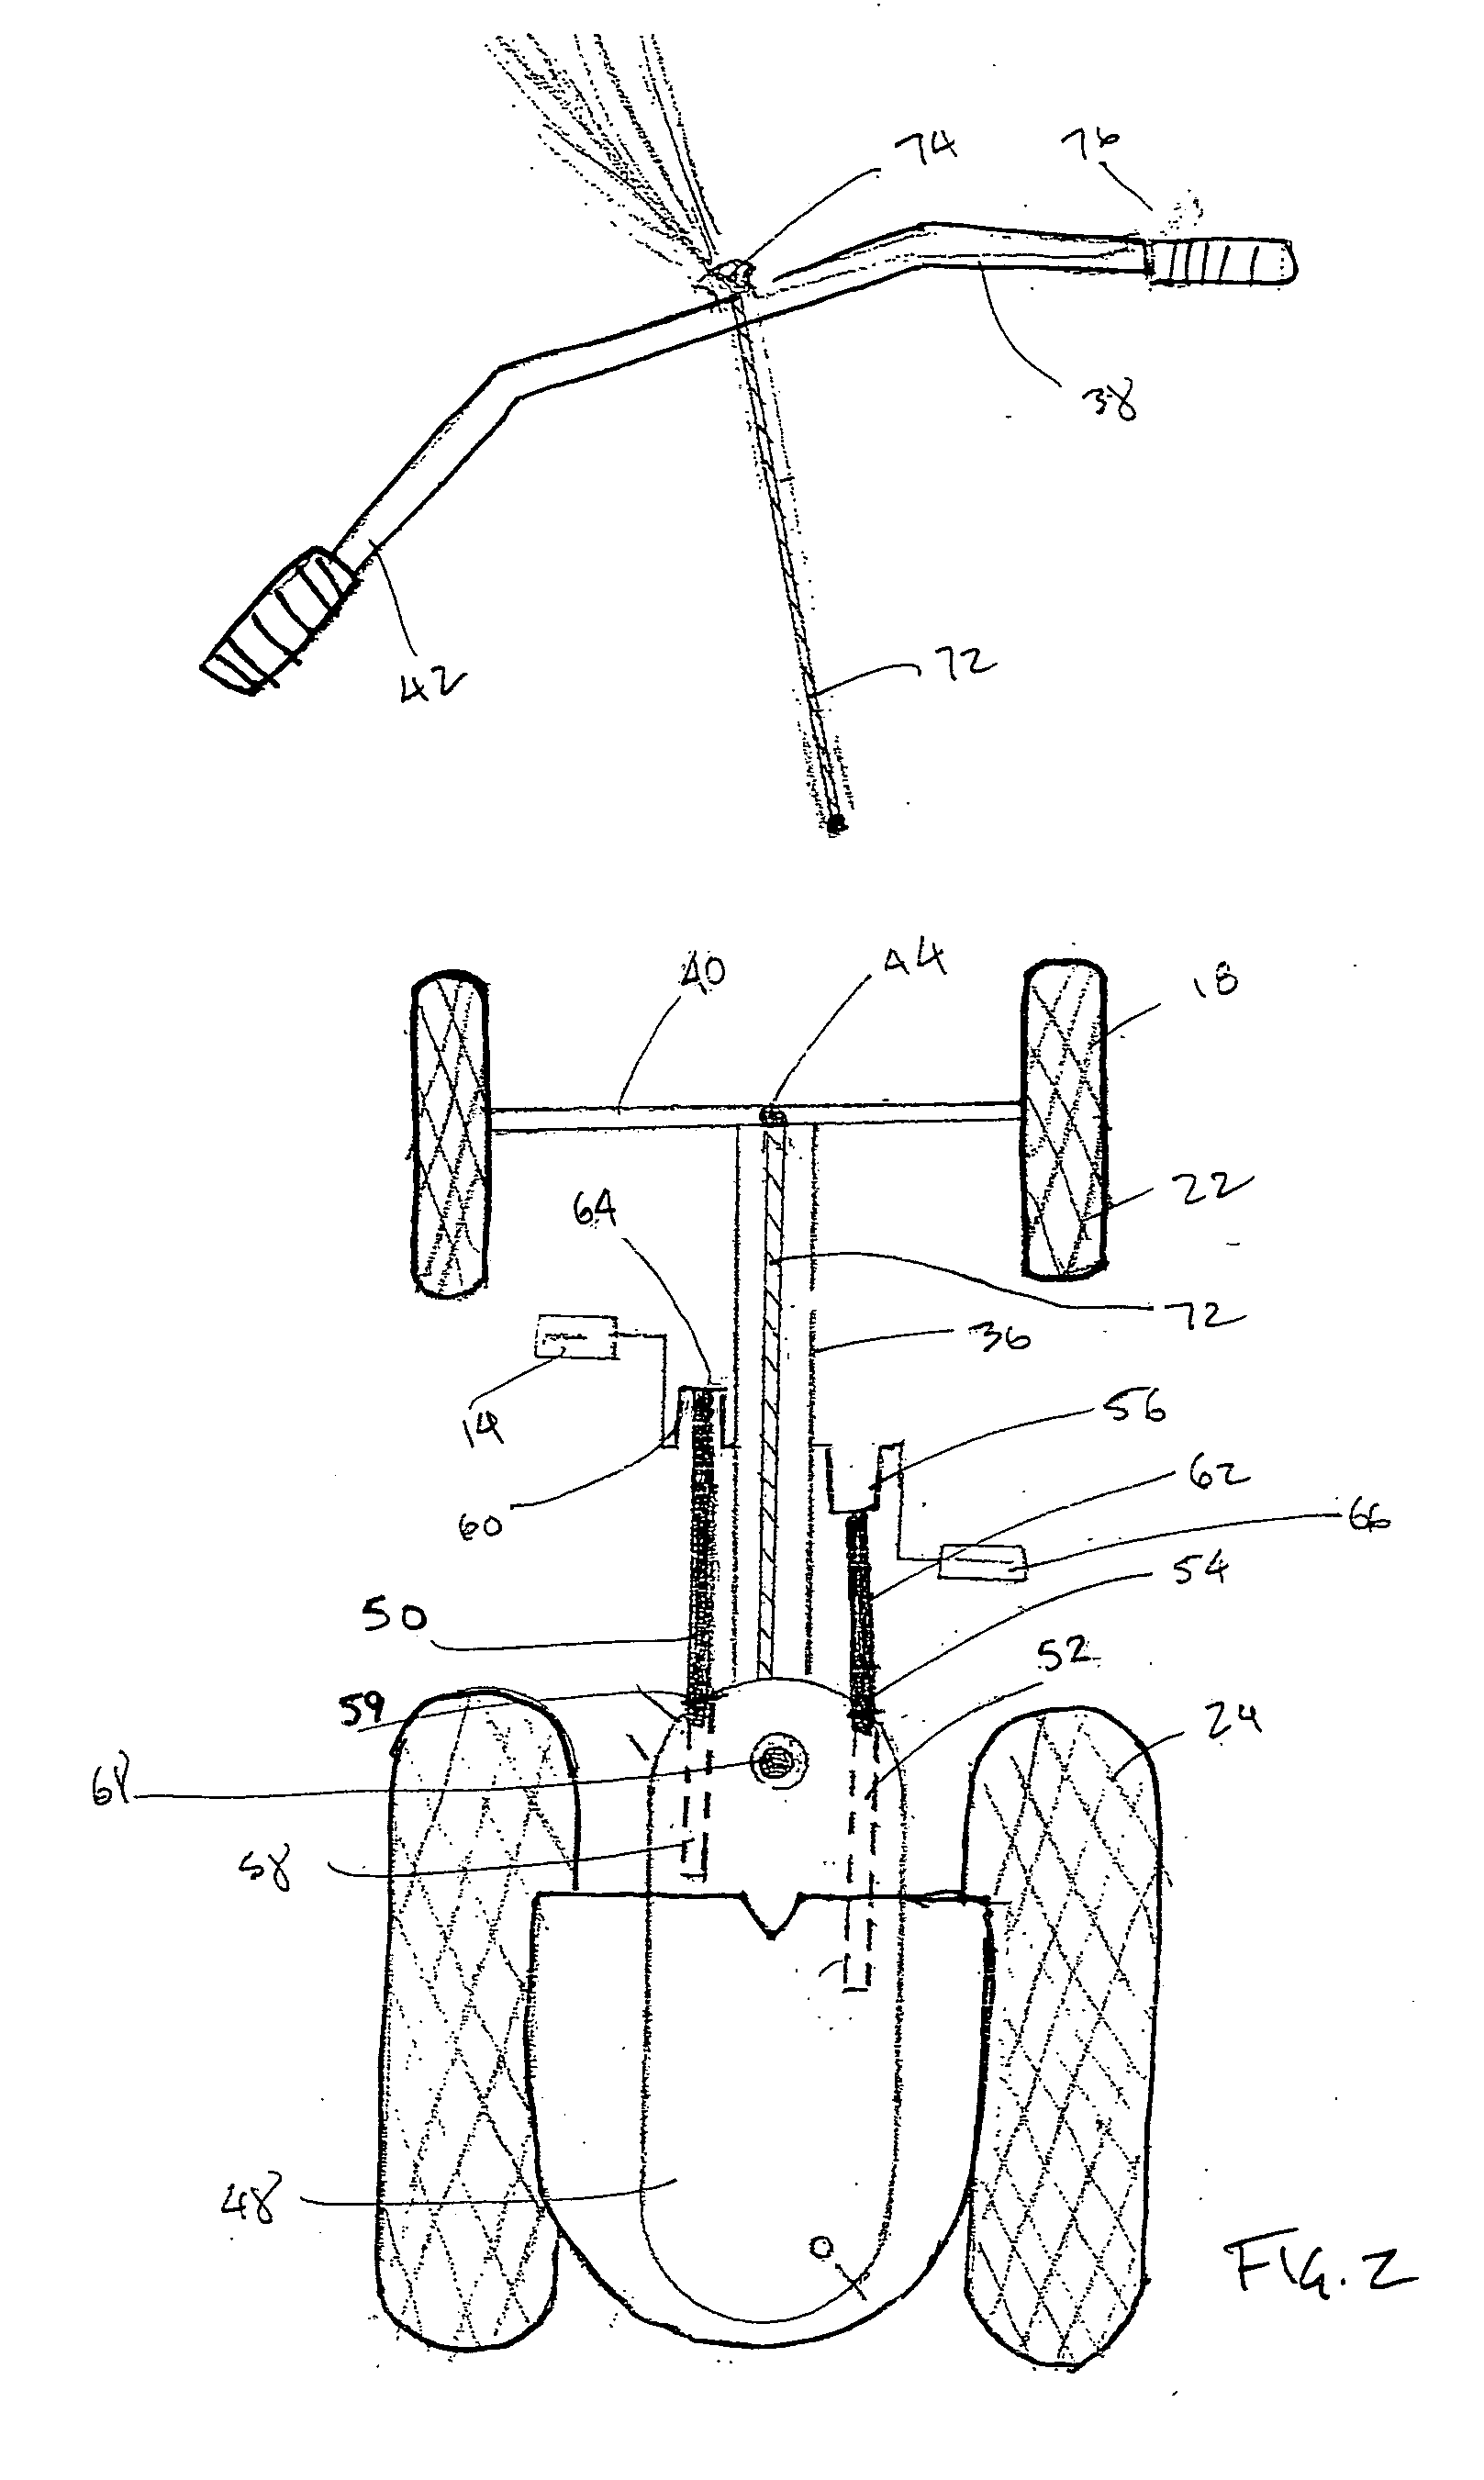 Pedal-operated fluid dispensing apparatus